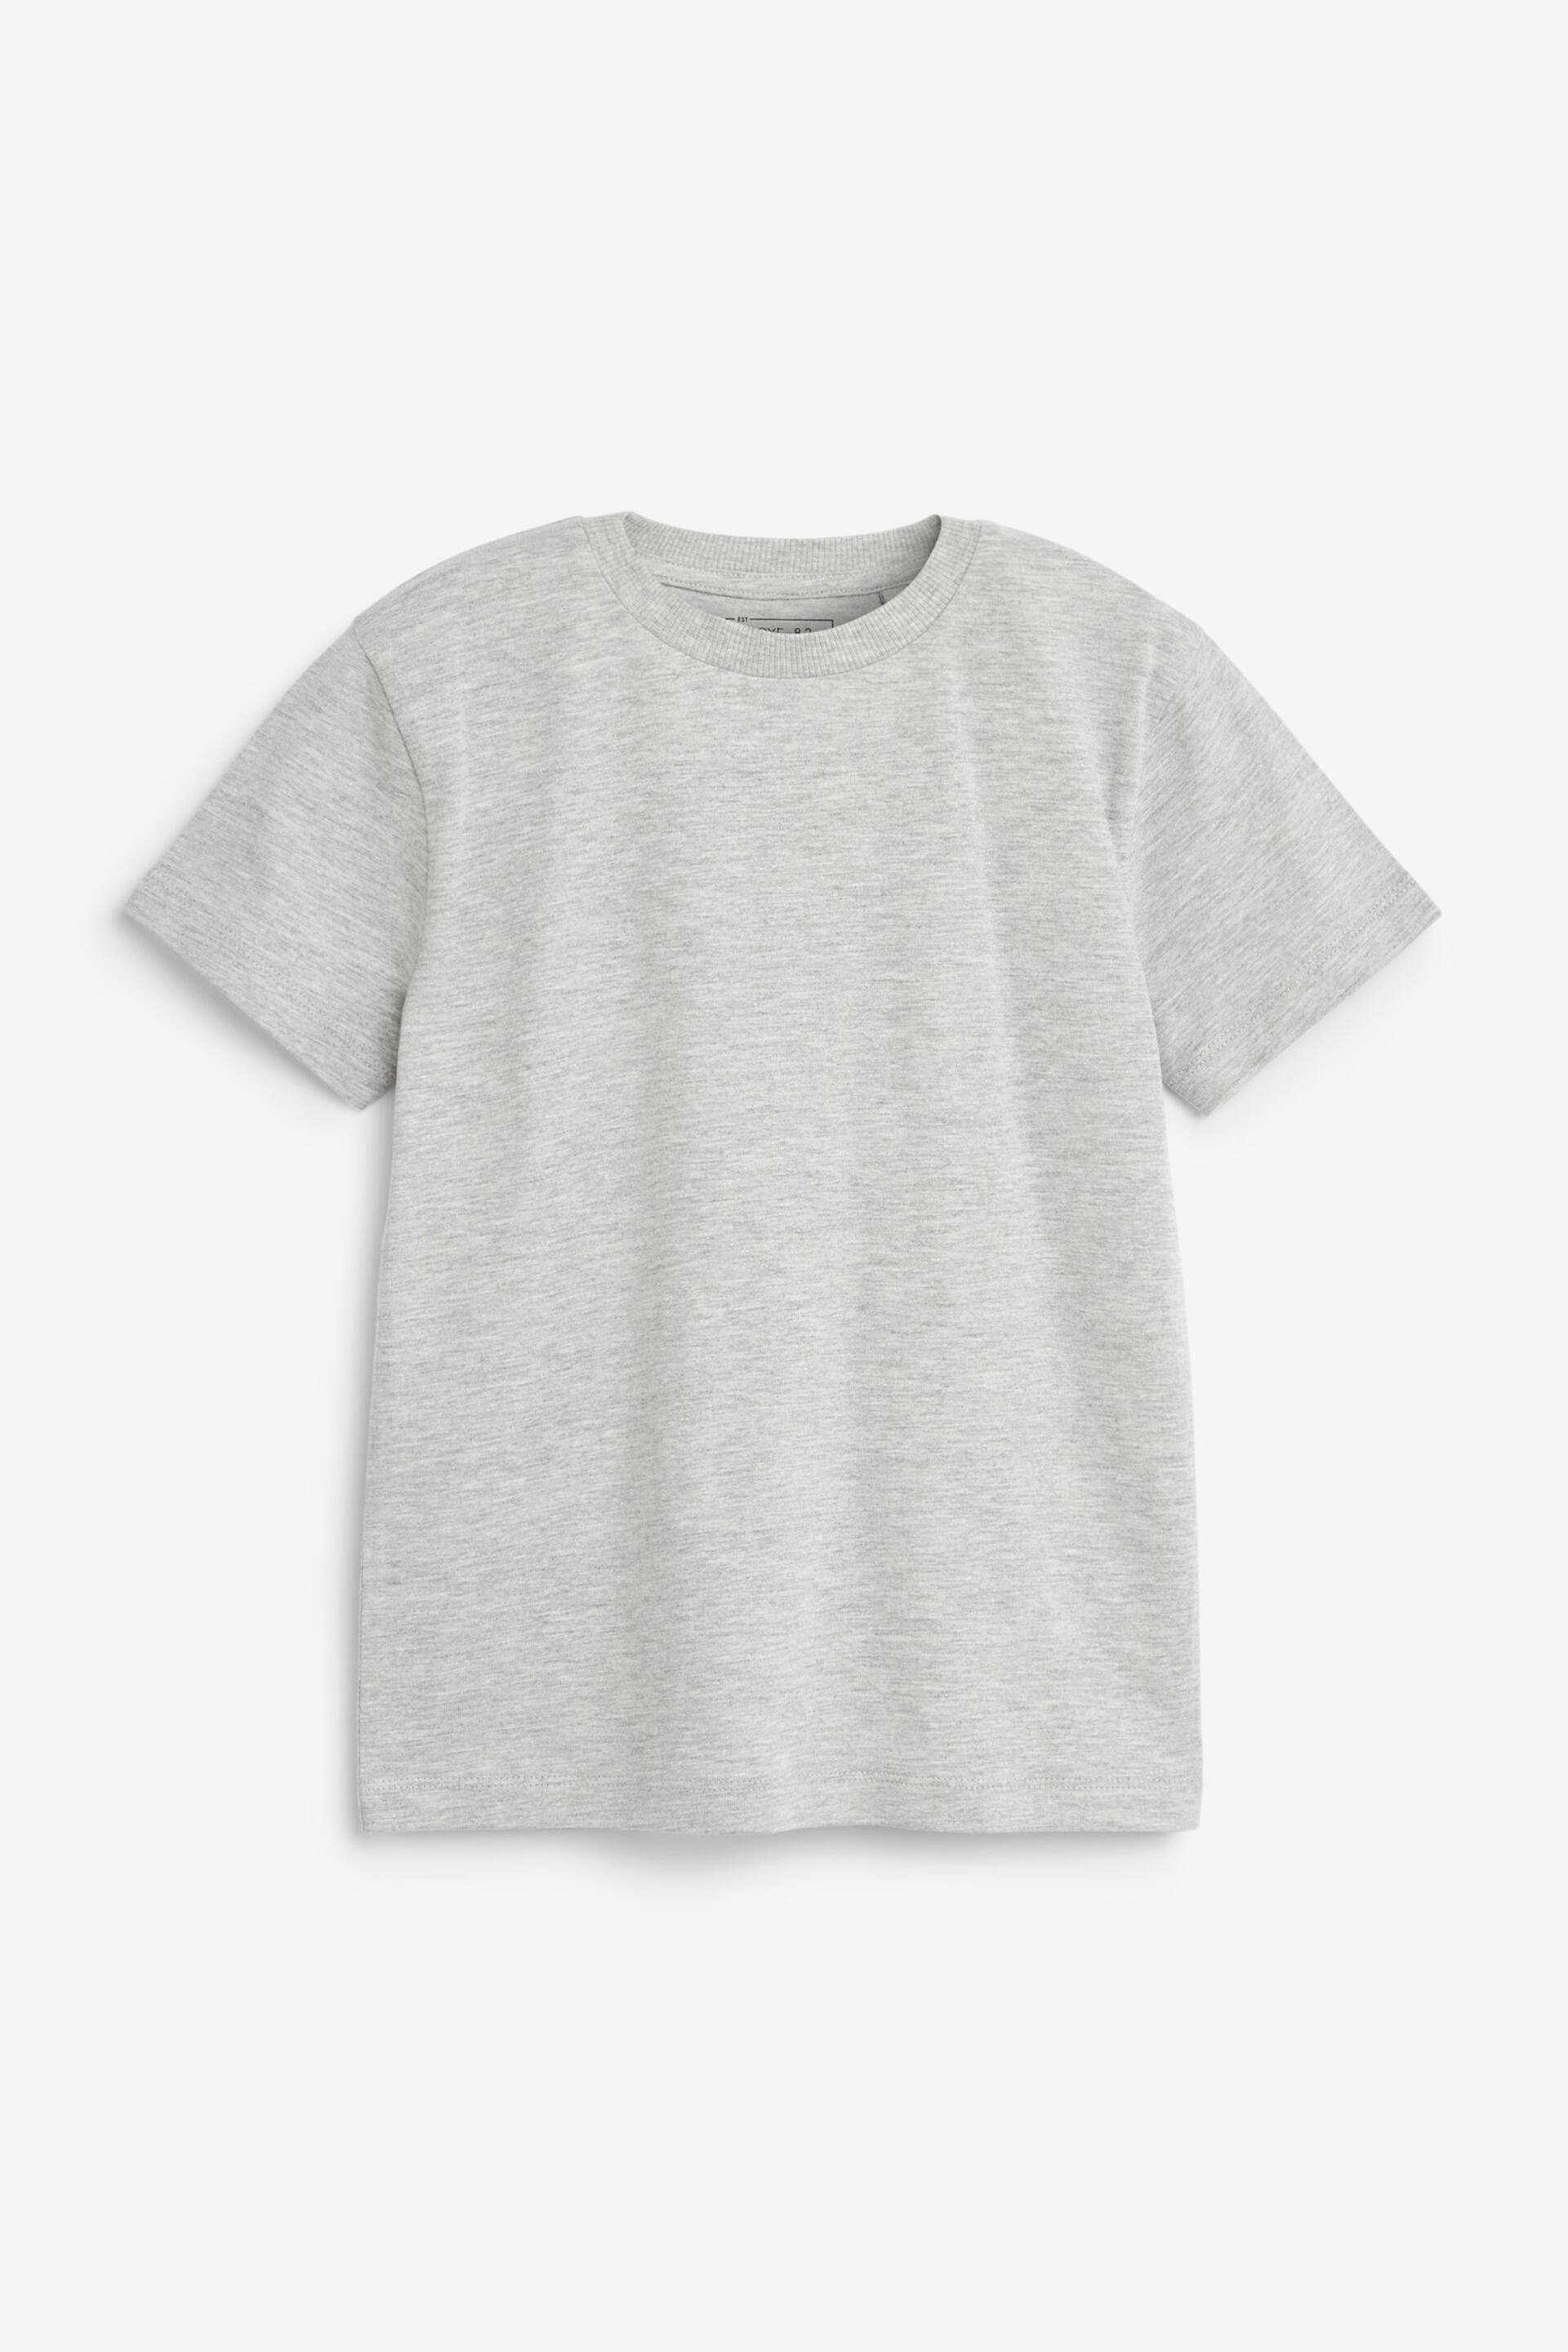 Grey Marl Cotton Short Sleeve T-Shirt (3-16yrs) - Image 1 of 3